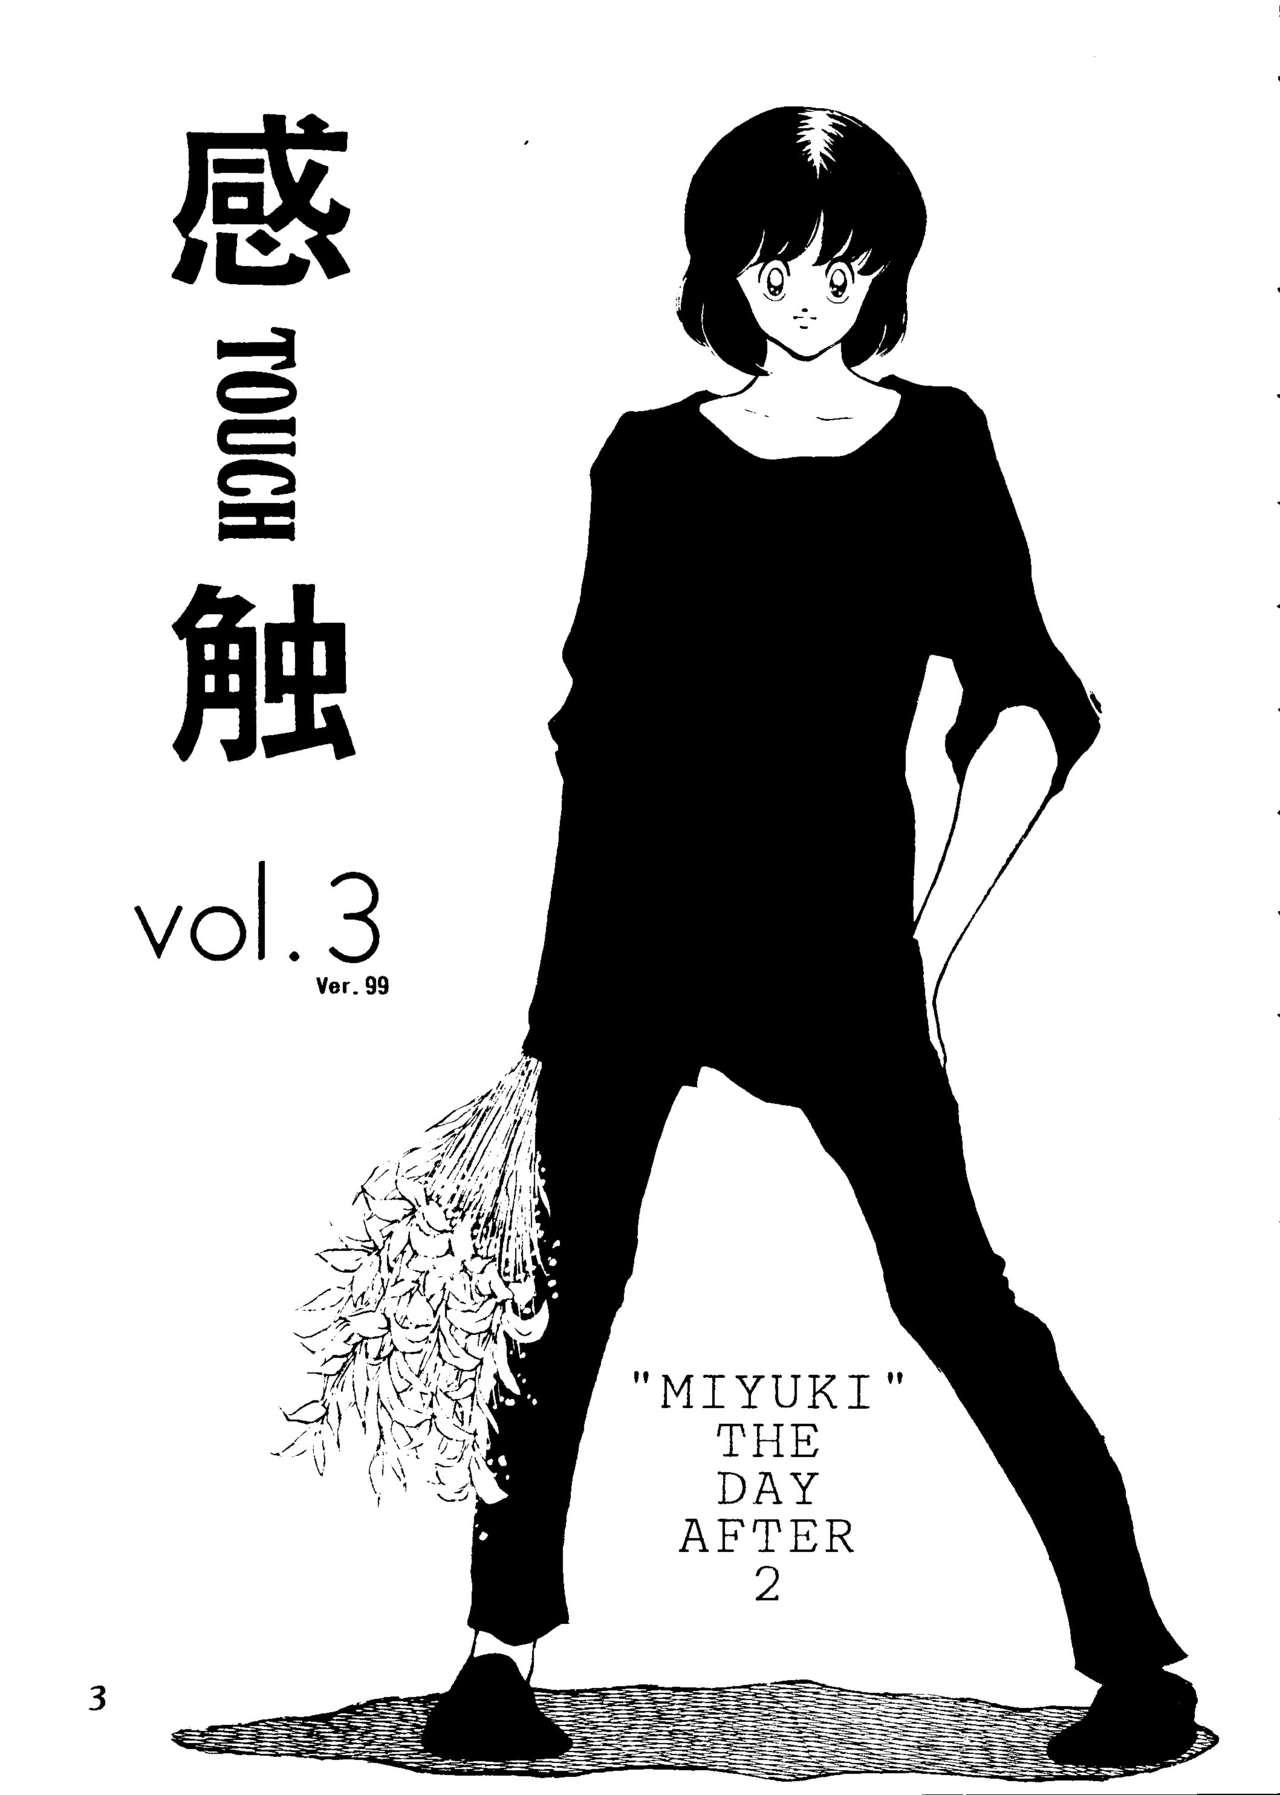 Com Touch vol. 3 ver.99 - Miyuki Hot Girls Fucking - Page 2